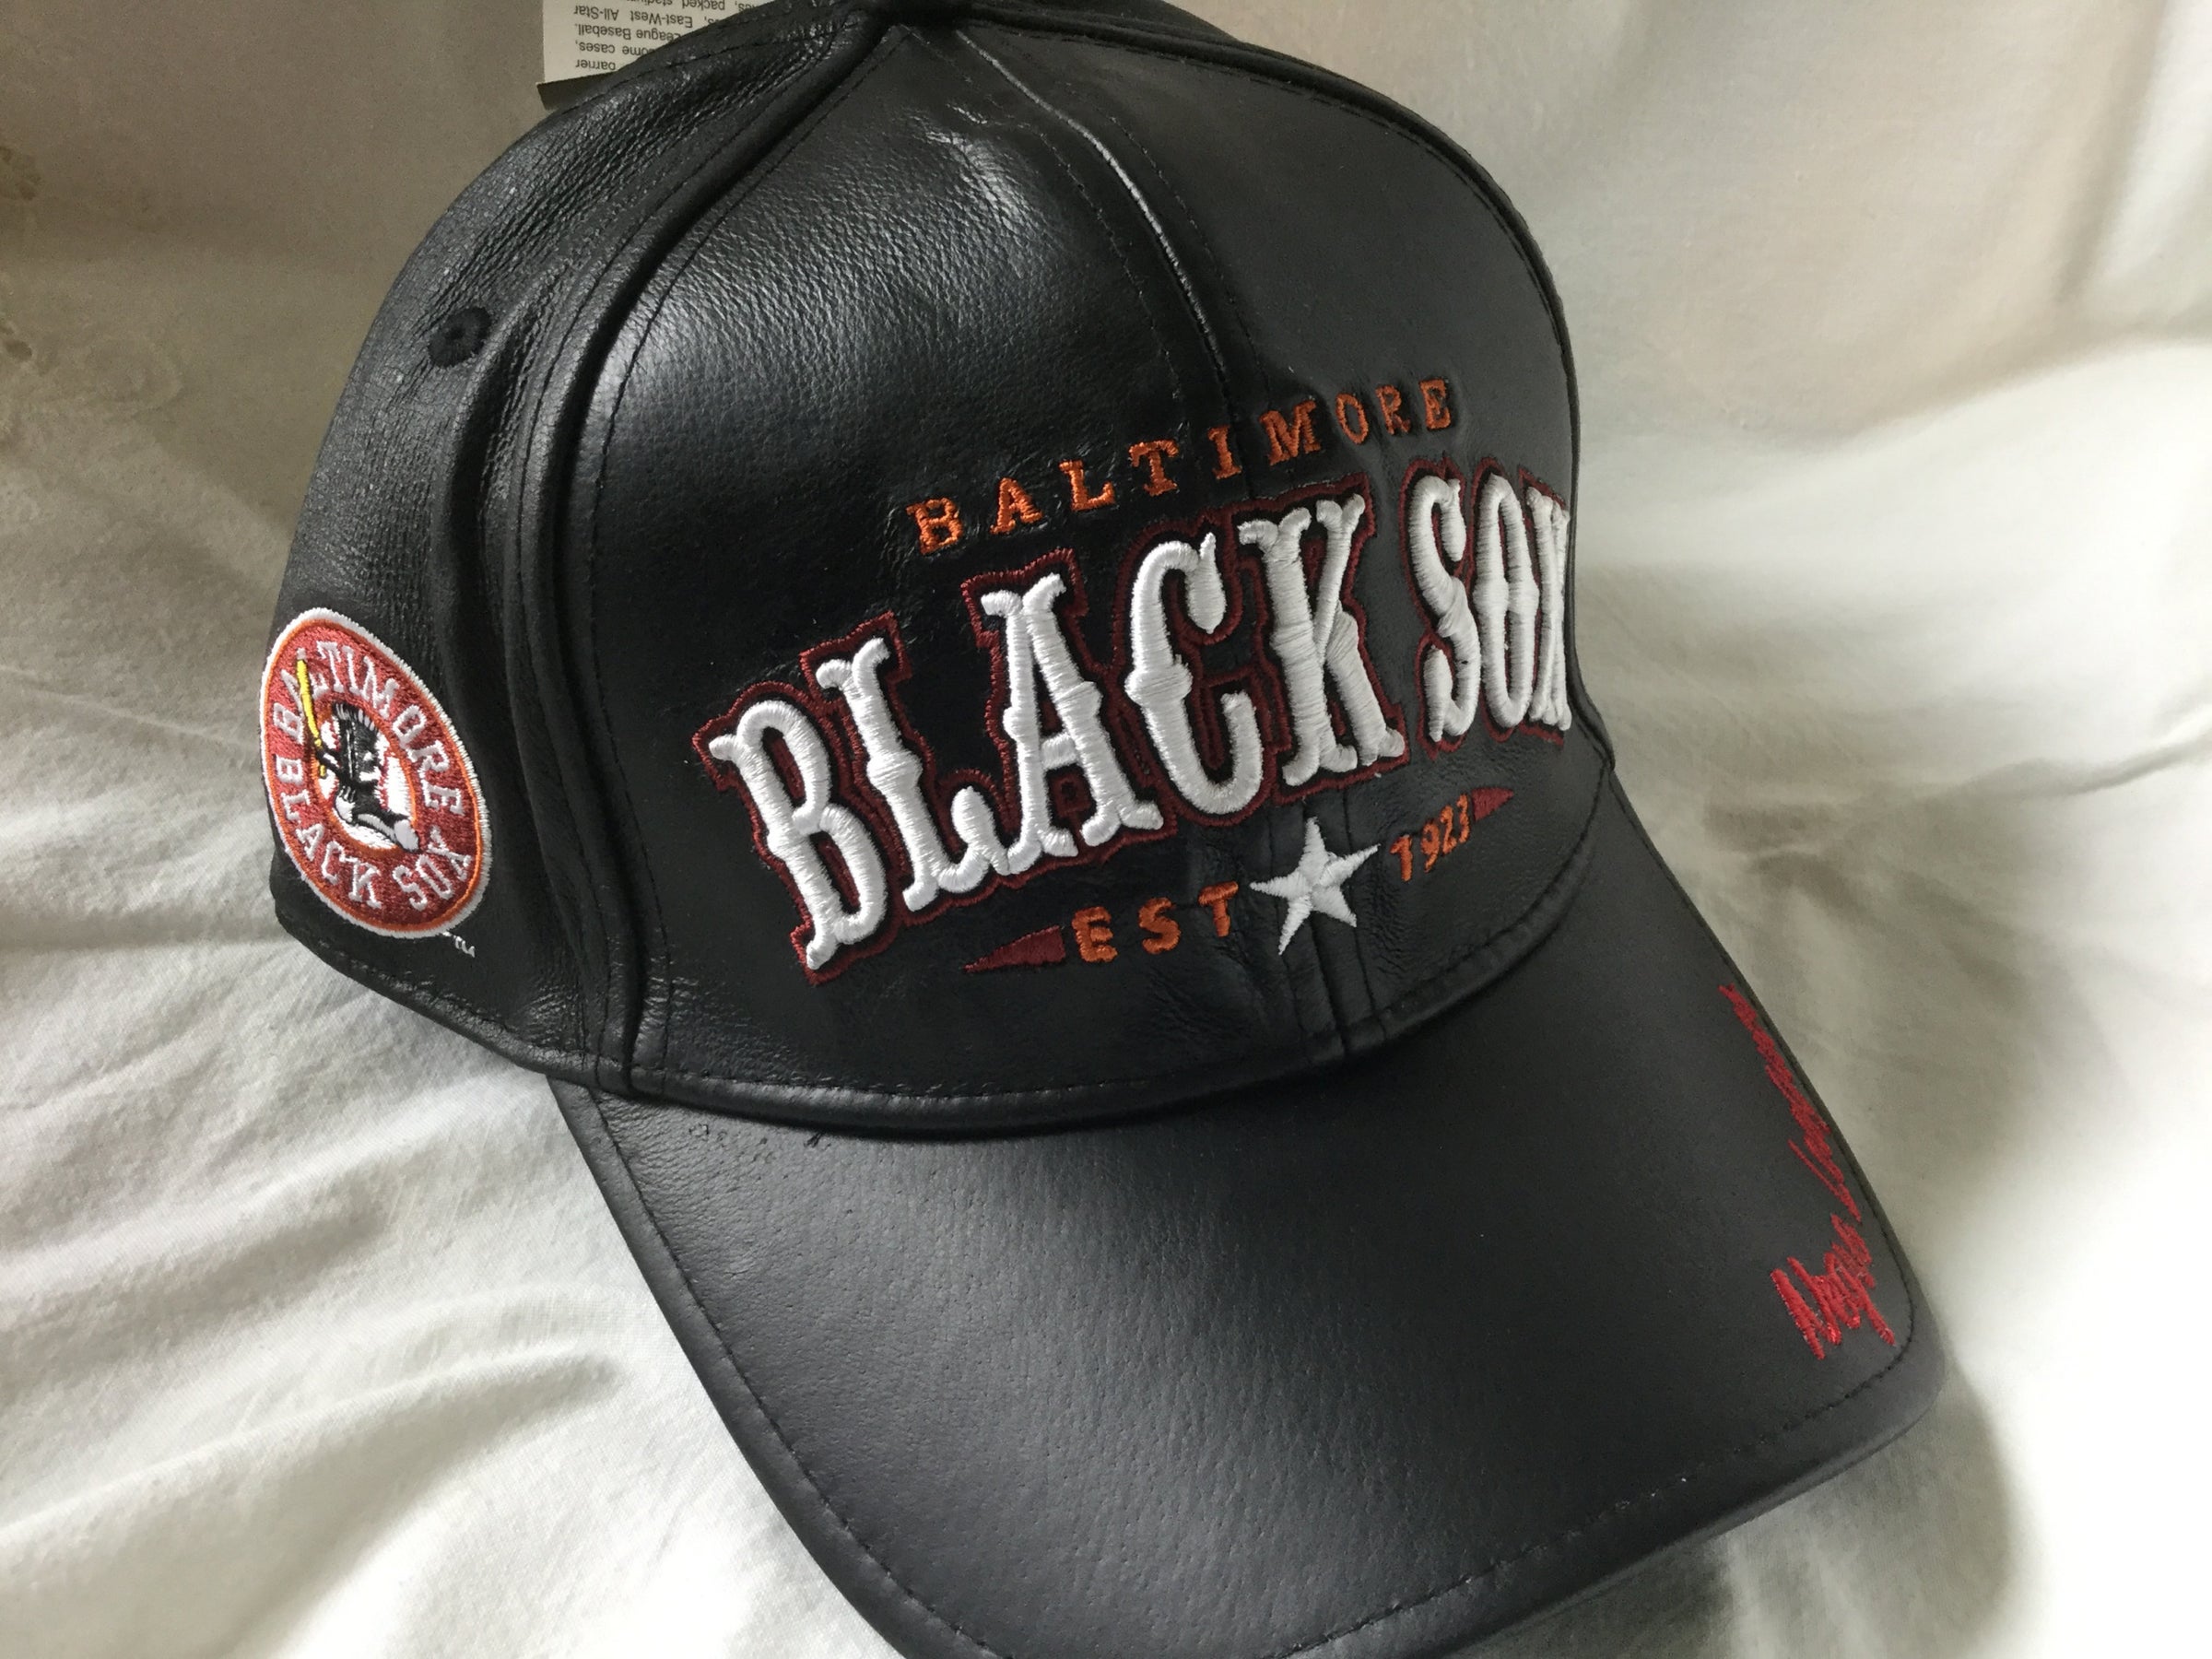 Baltimore Black Sox Leather Cap